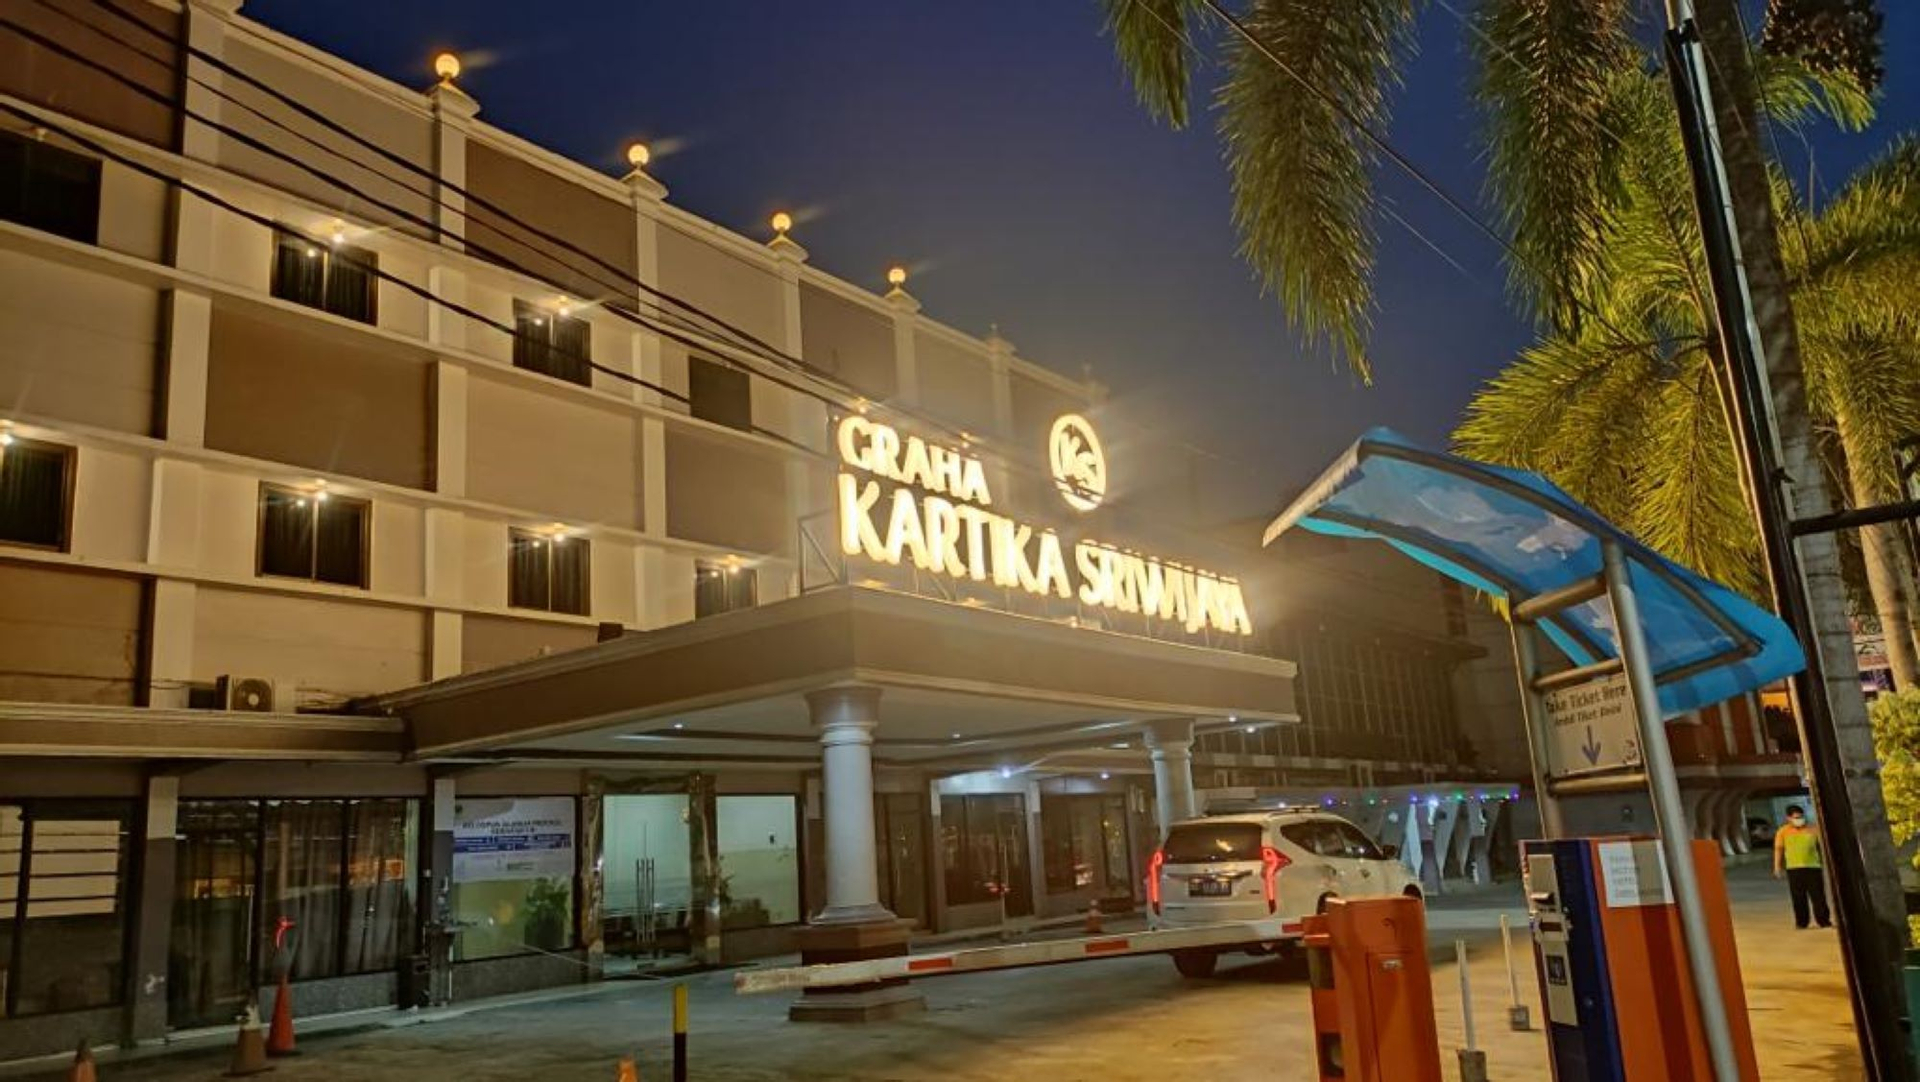 Graha Kartika Sriwijaya, Palembang